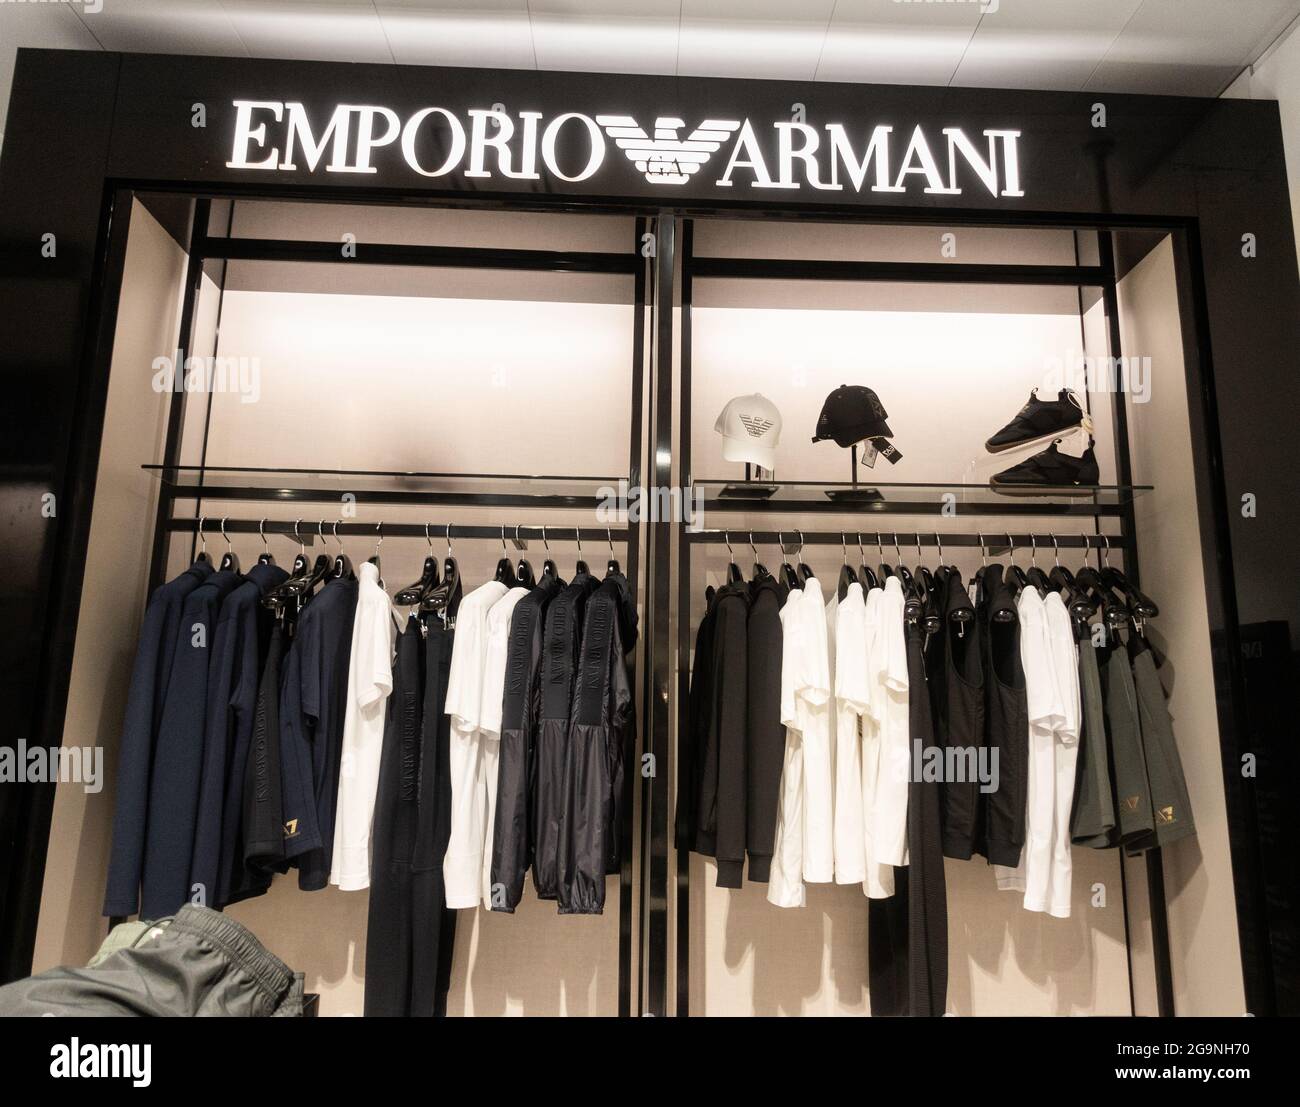 Emporio Armani clothing store display Stock Photo - Alamy